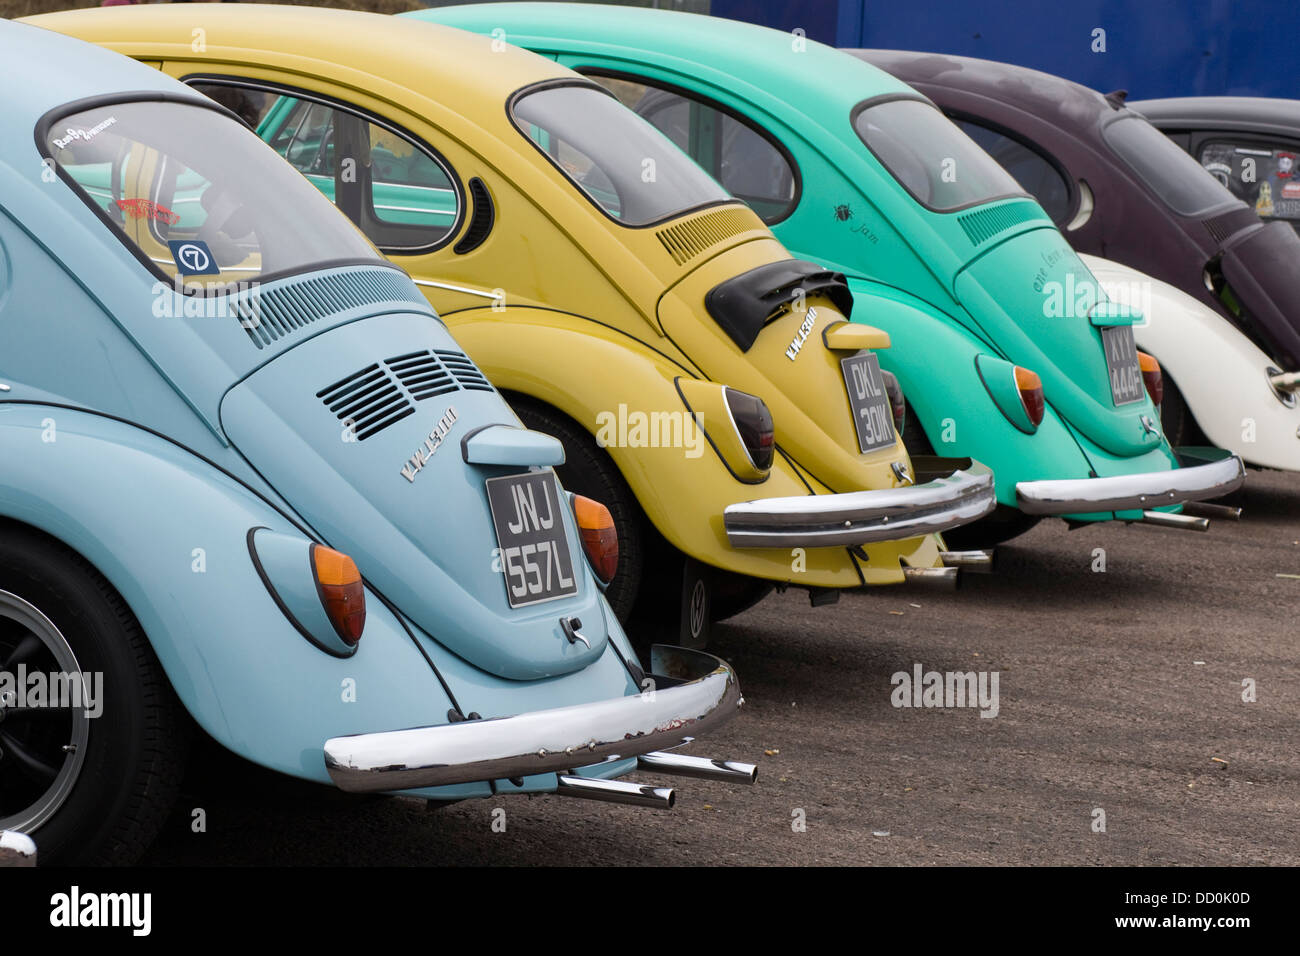 A Row of Volkswagen Beetles at Santa pod Raceway England Stock Photo